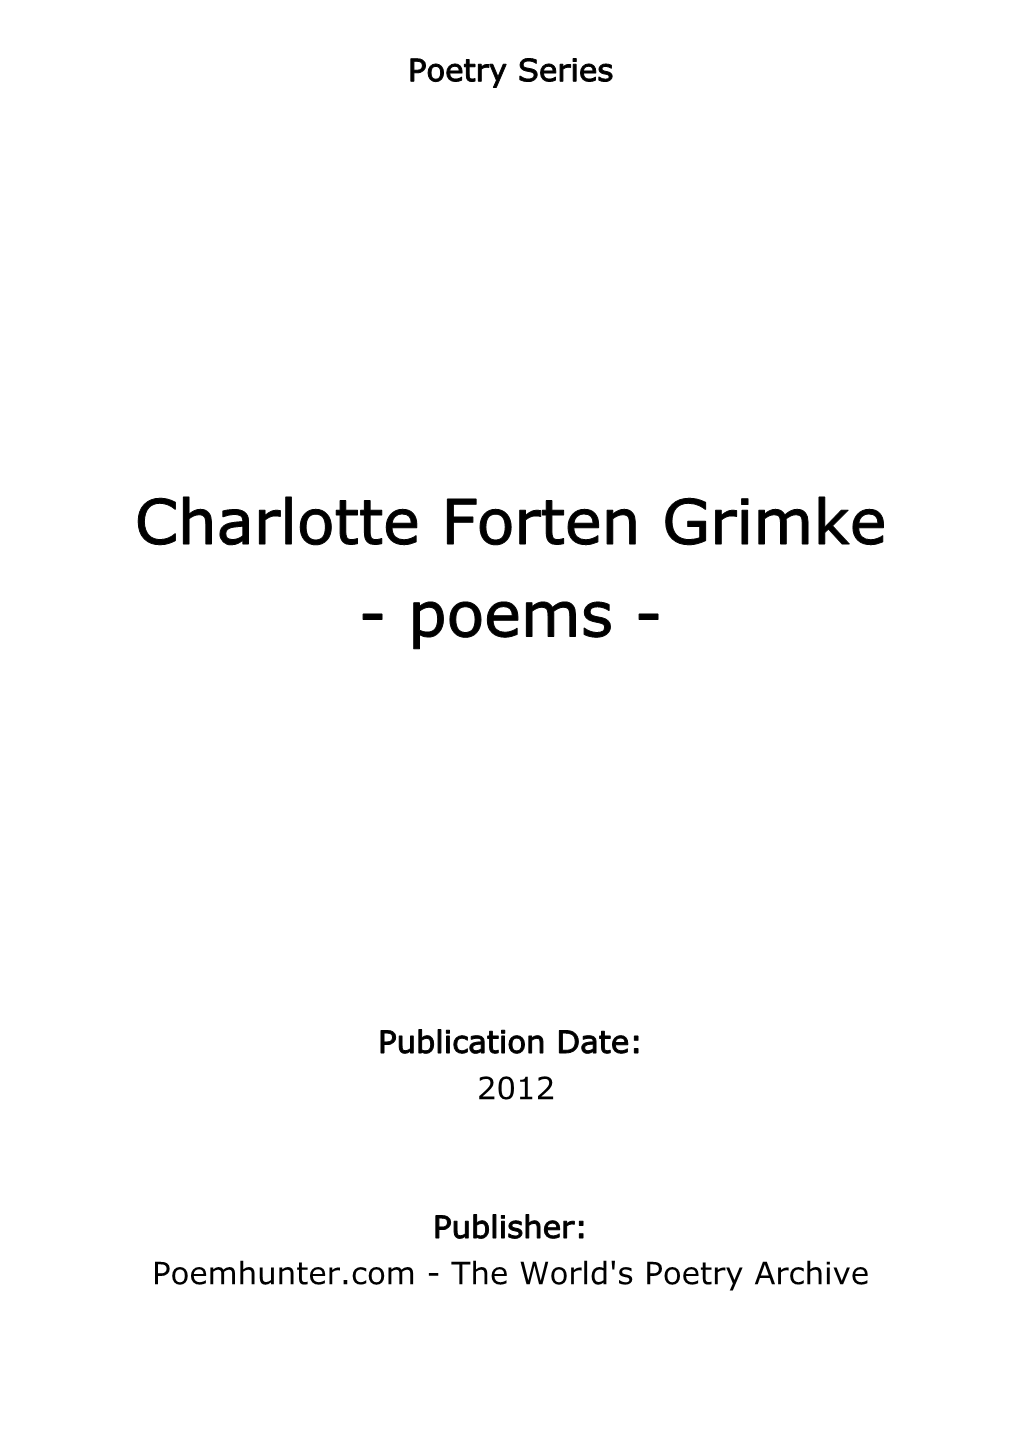 Charlotte Forten Grimke - Poems